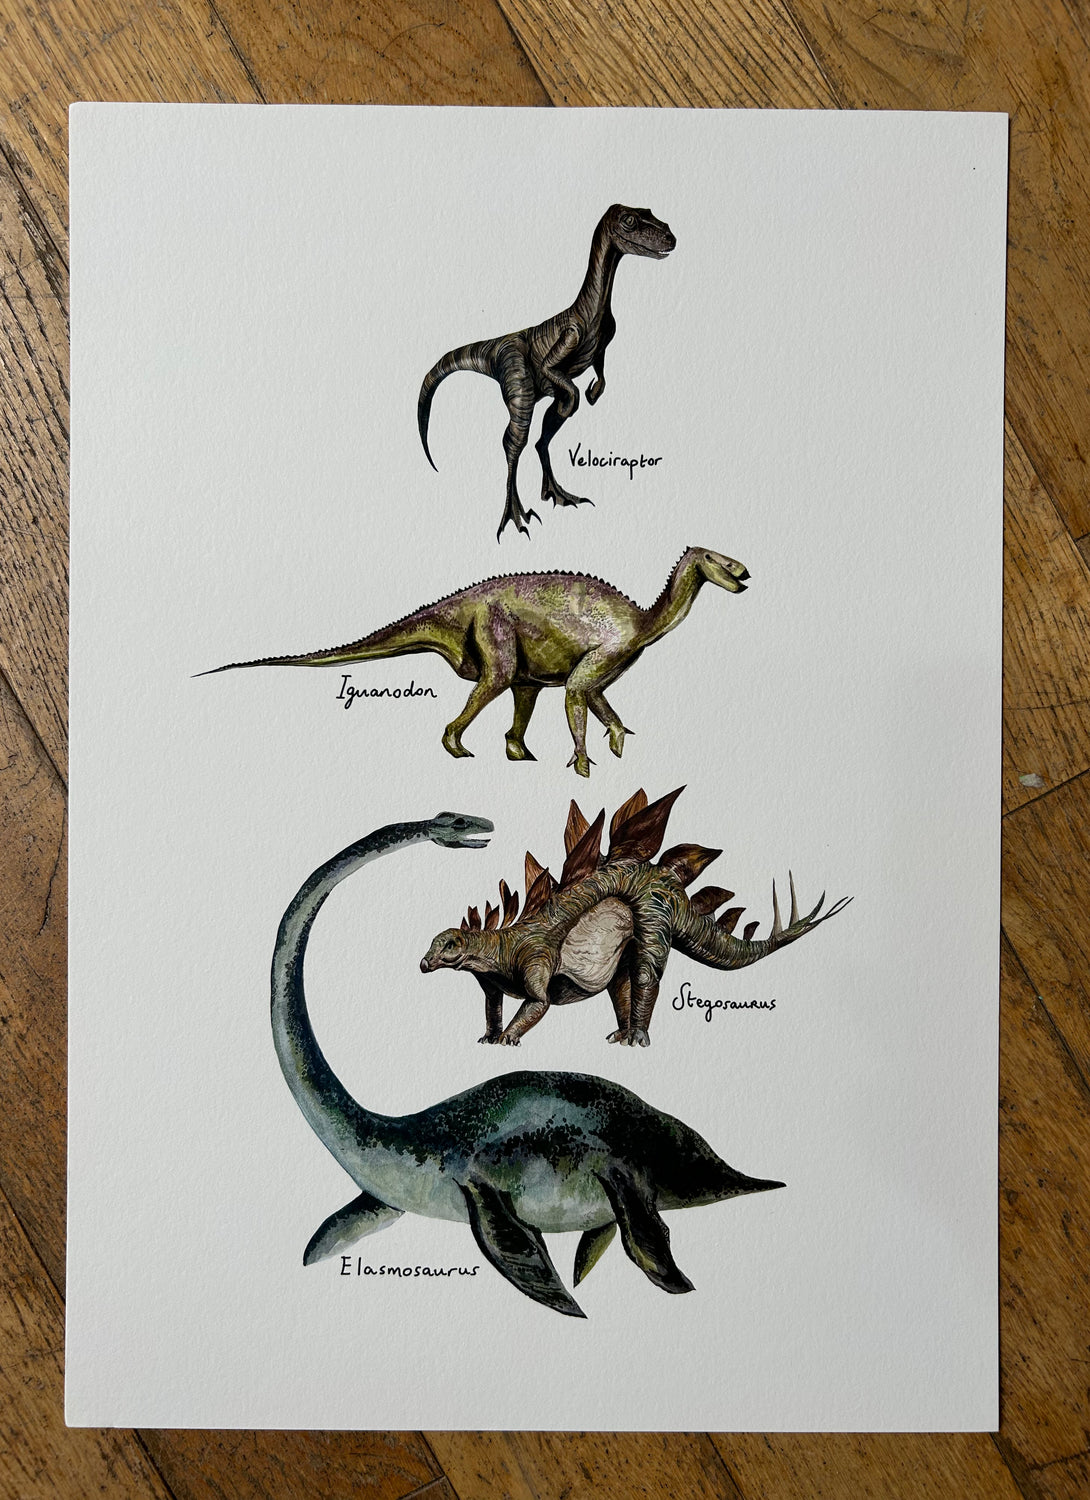 A3 Dinosaur Print on white